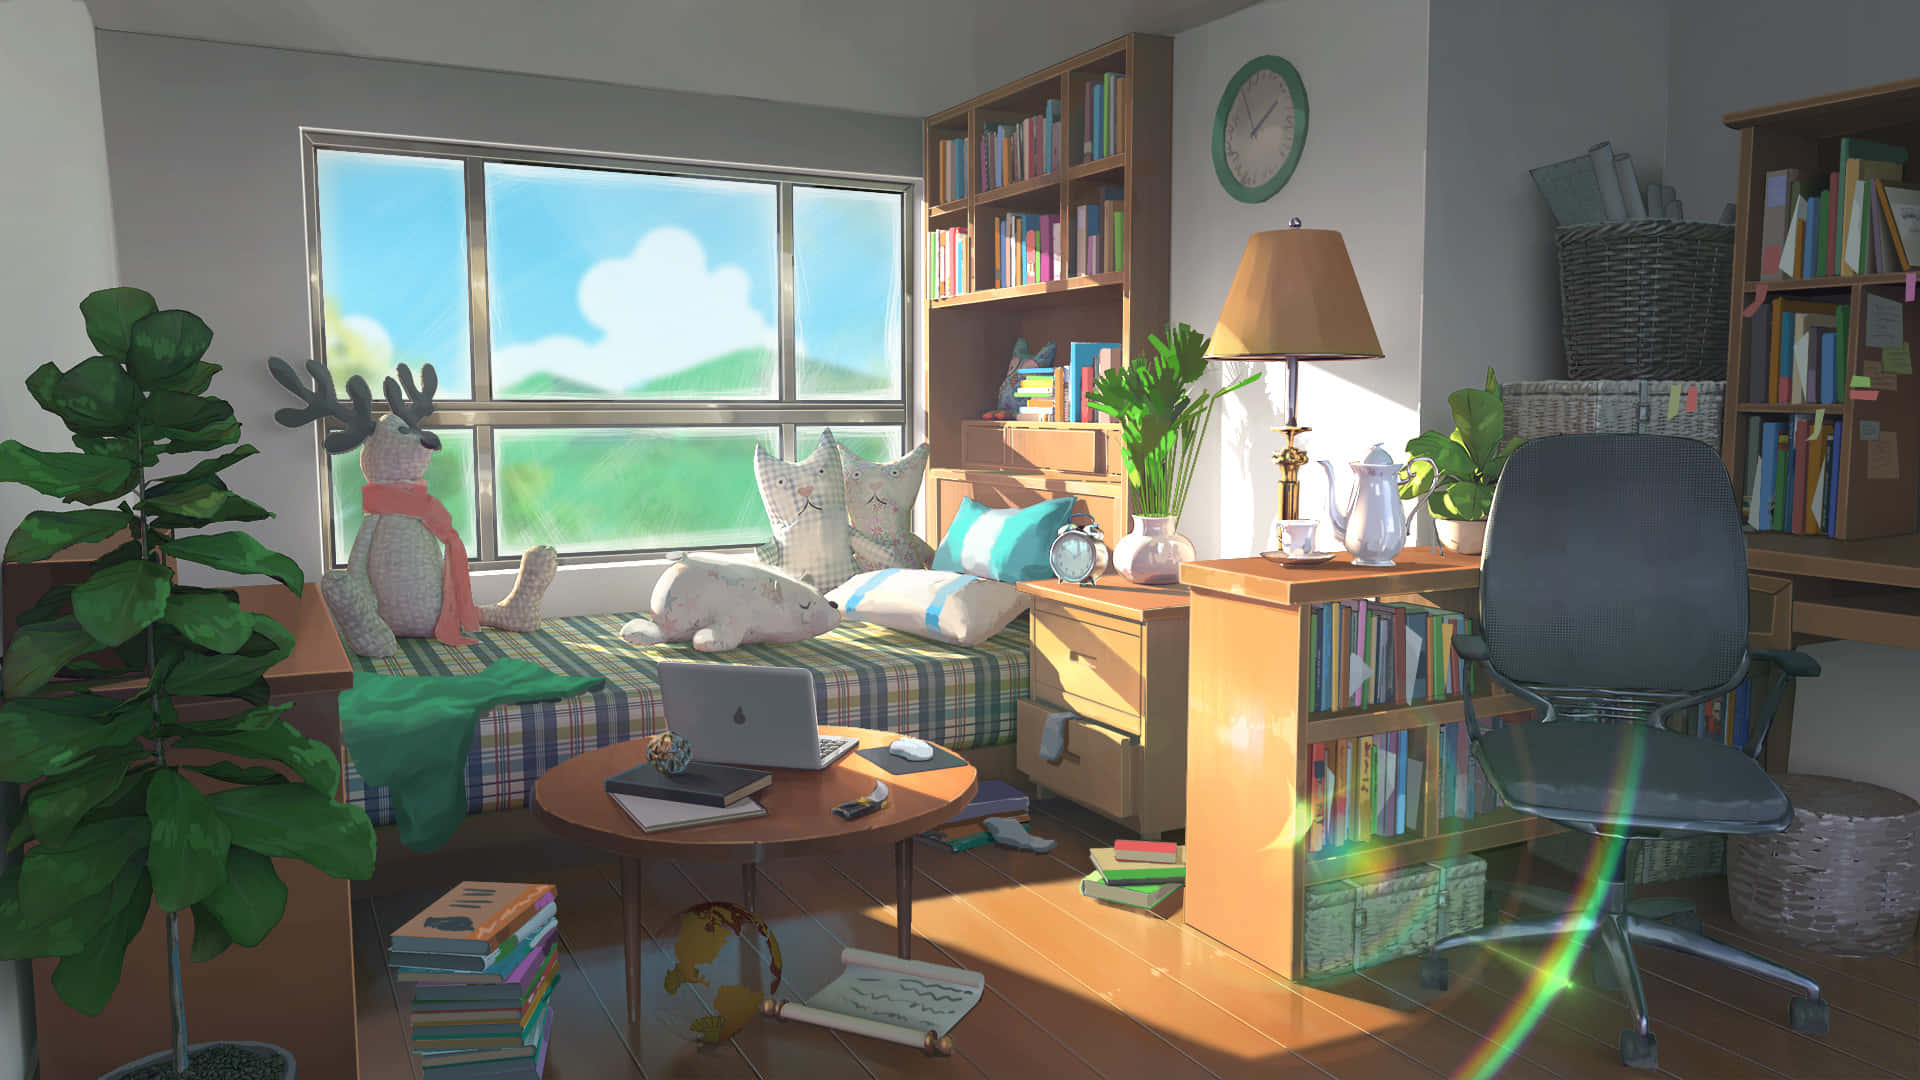 A Room With A Desk, Bookshelf, And Plants